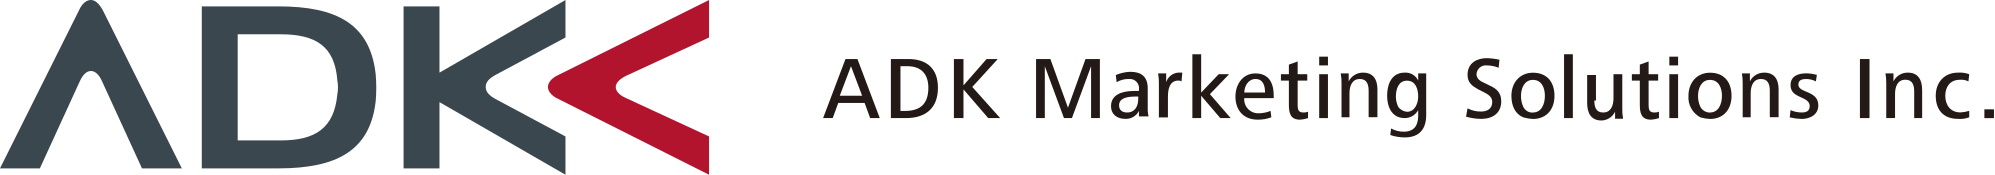 ADK Marketing Solutions - company